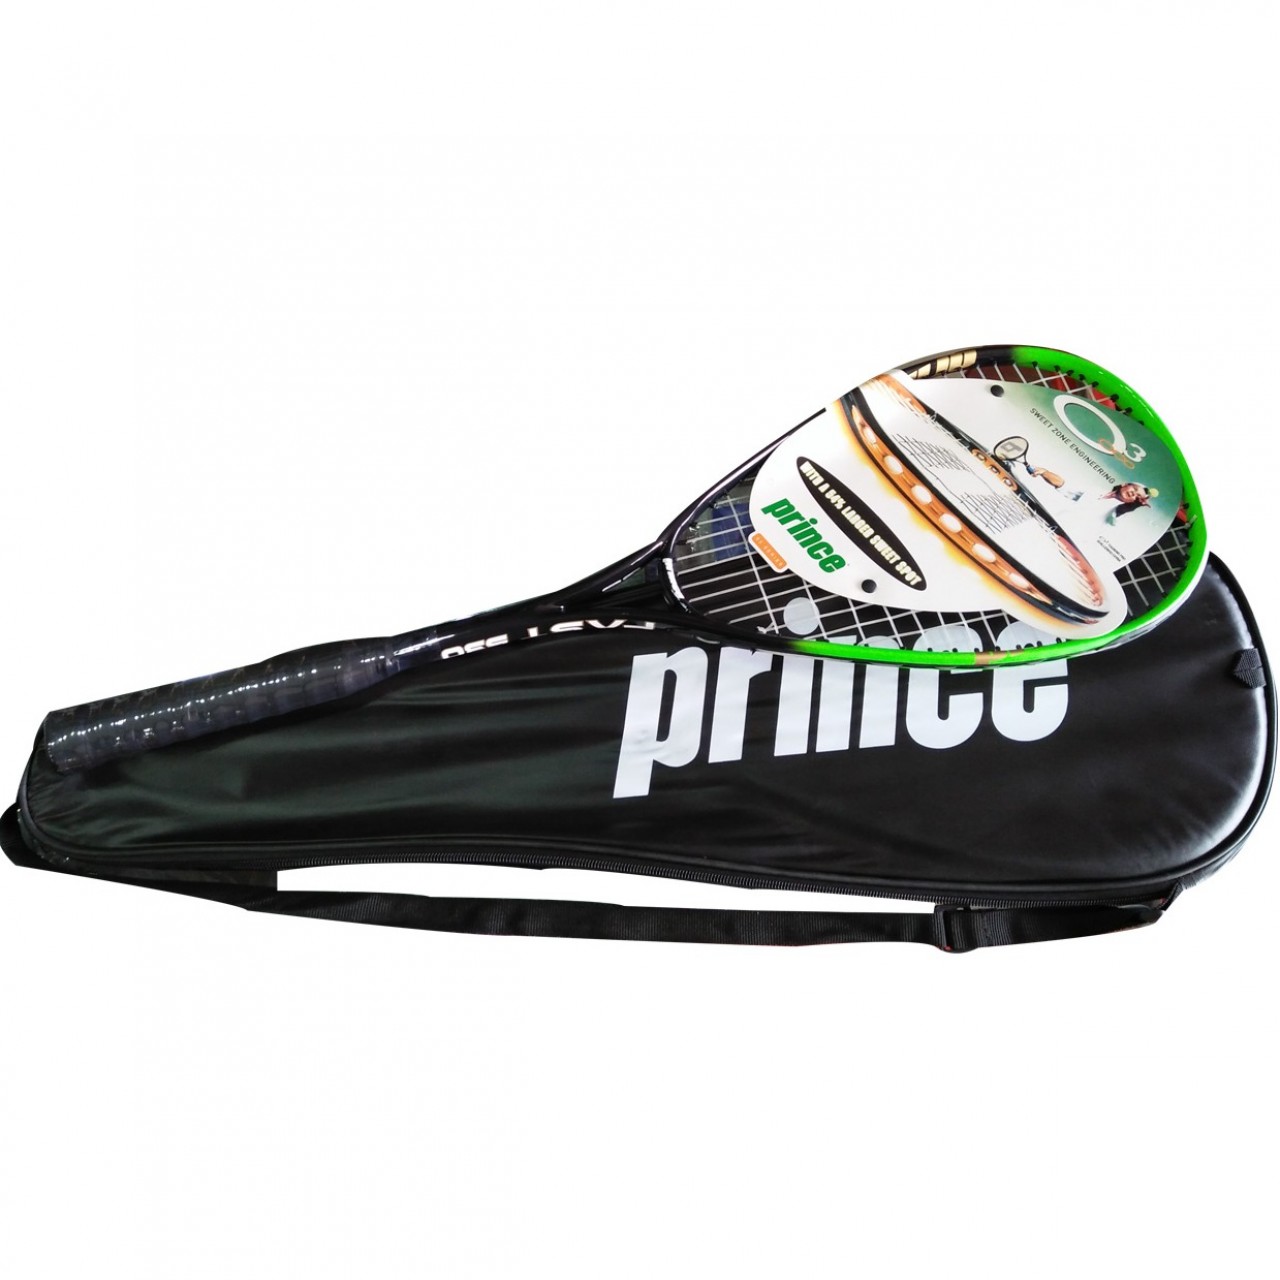 Prince Squash racket - Black - 1Pcs